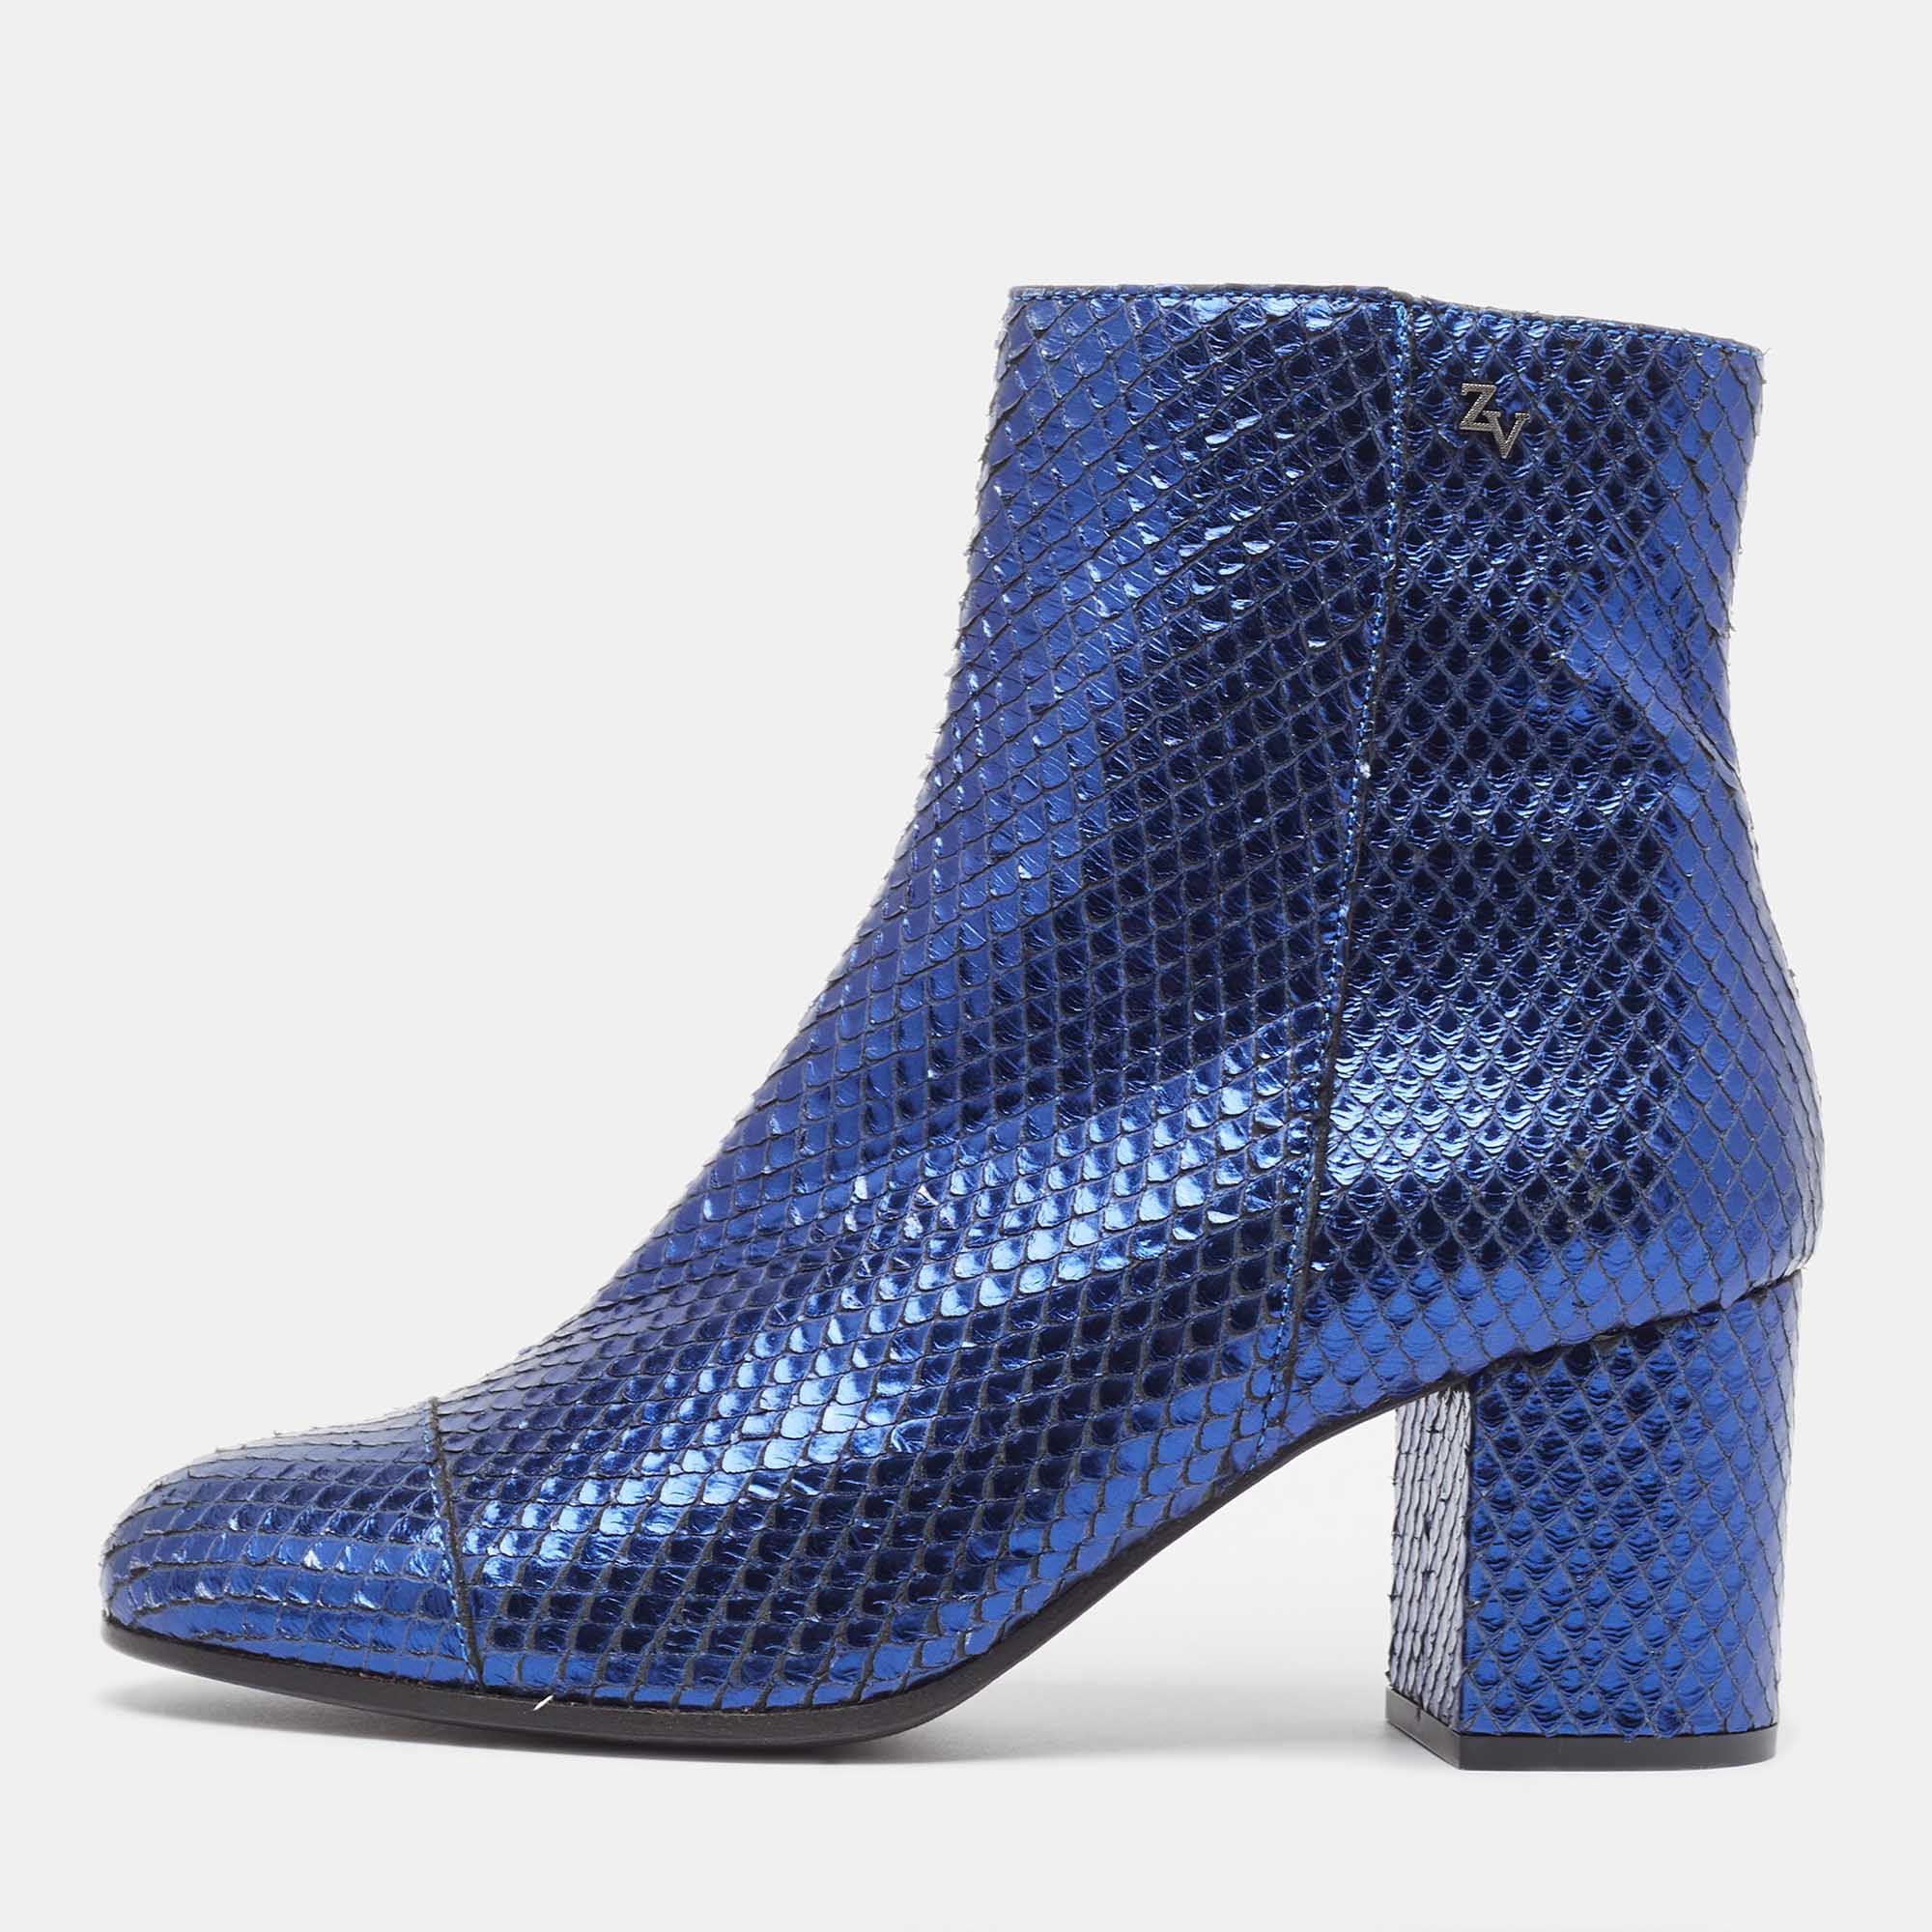 Zadig & voltaire zadiq & voltaire blue python block heel ankle boots size 37